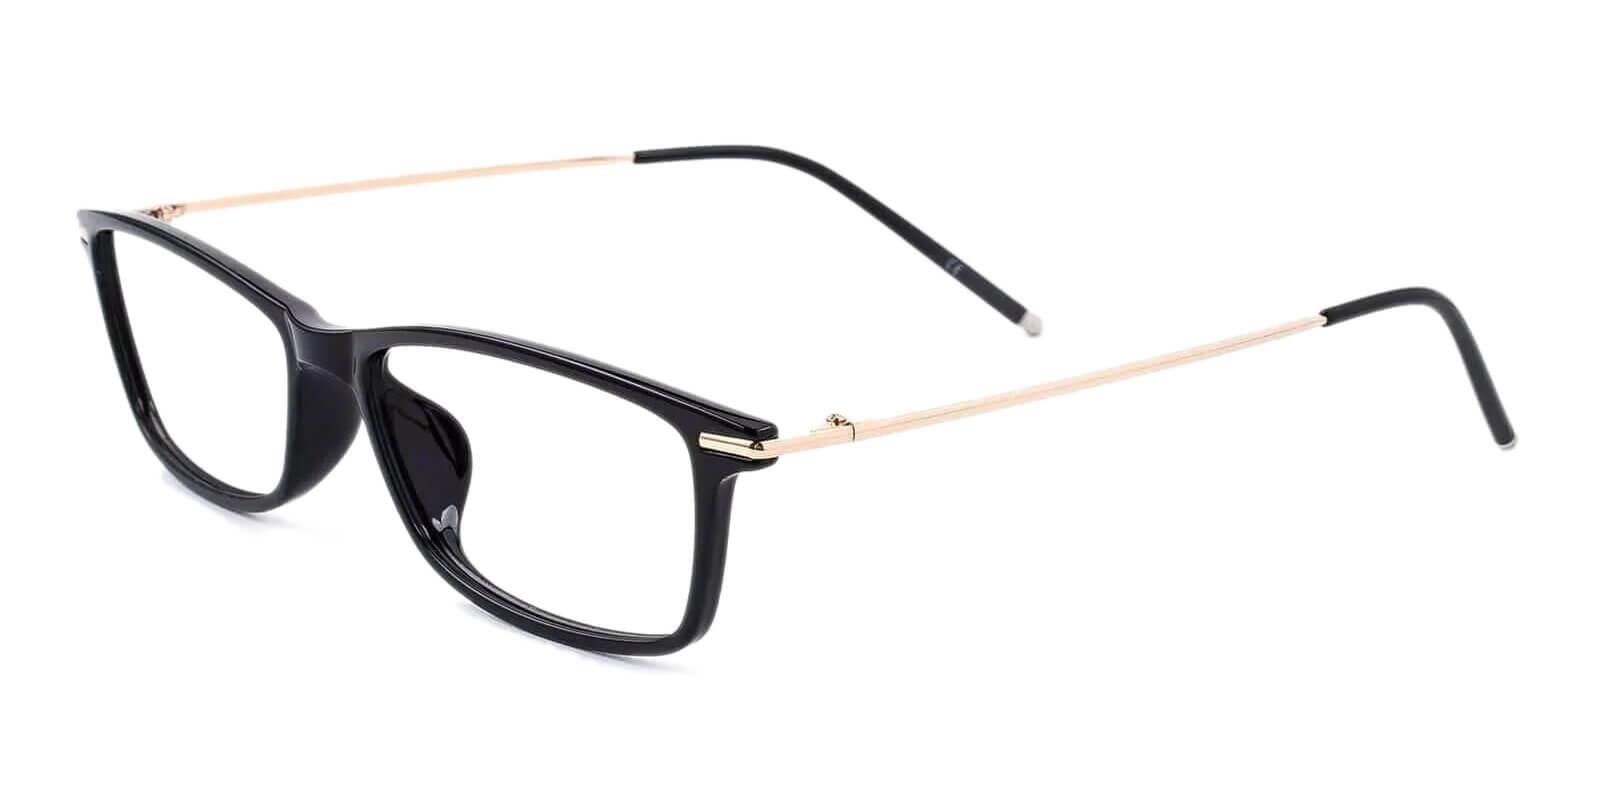 Maldives Black TR Lightweight , UniversalBridgeFit , Eyeglasses Frames from ABBE Glasses